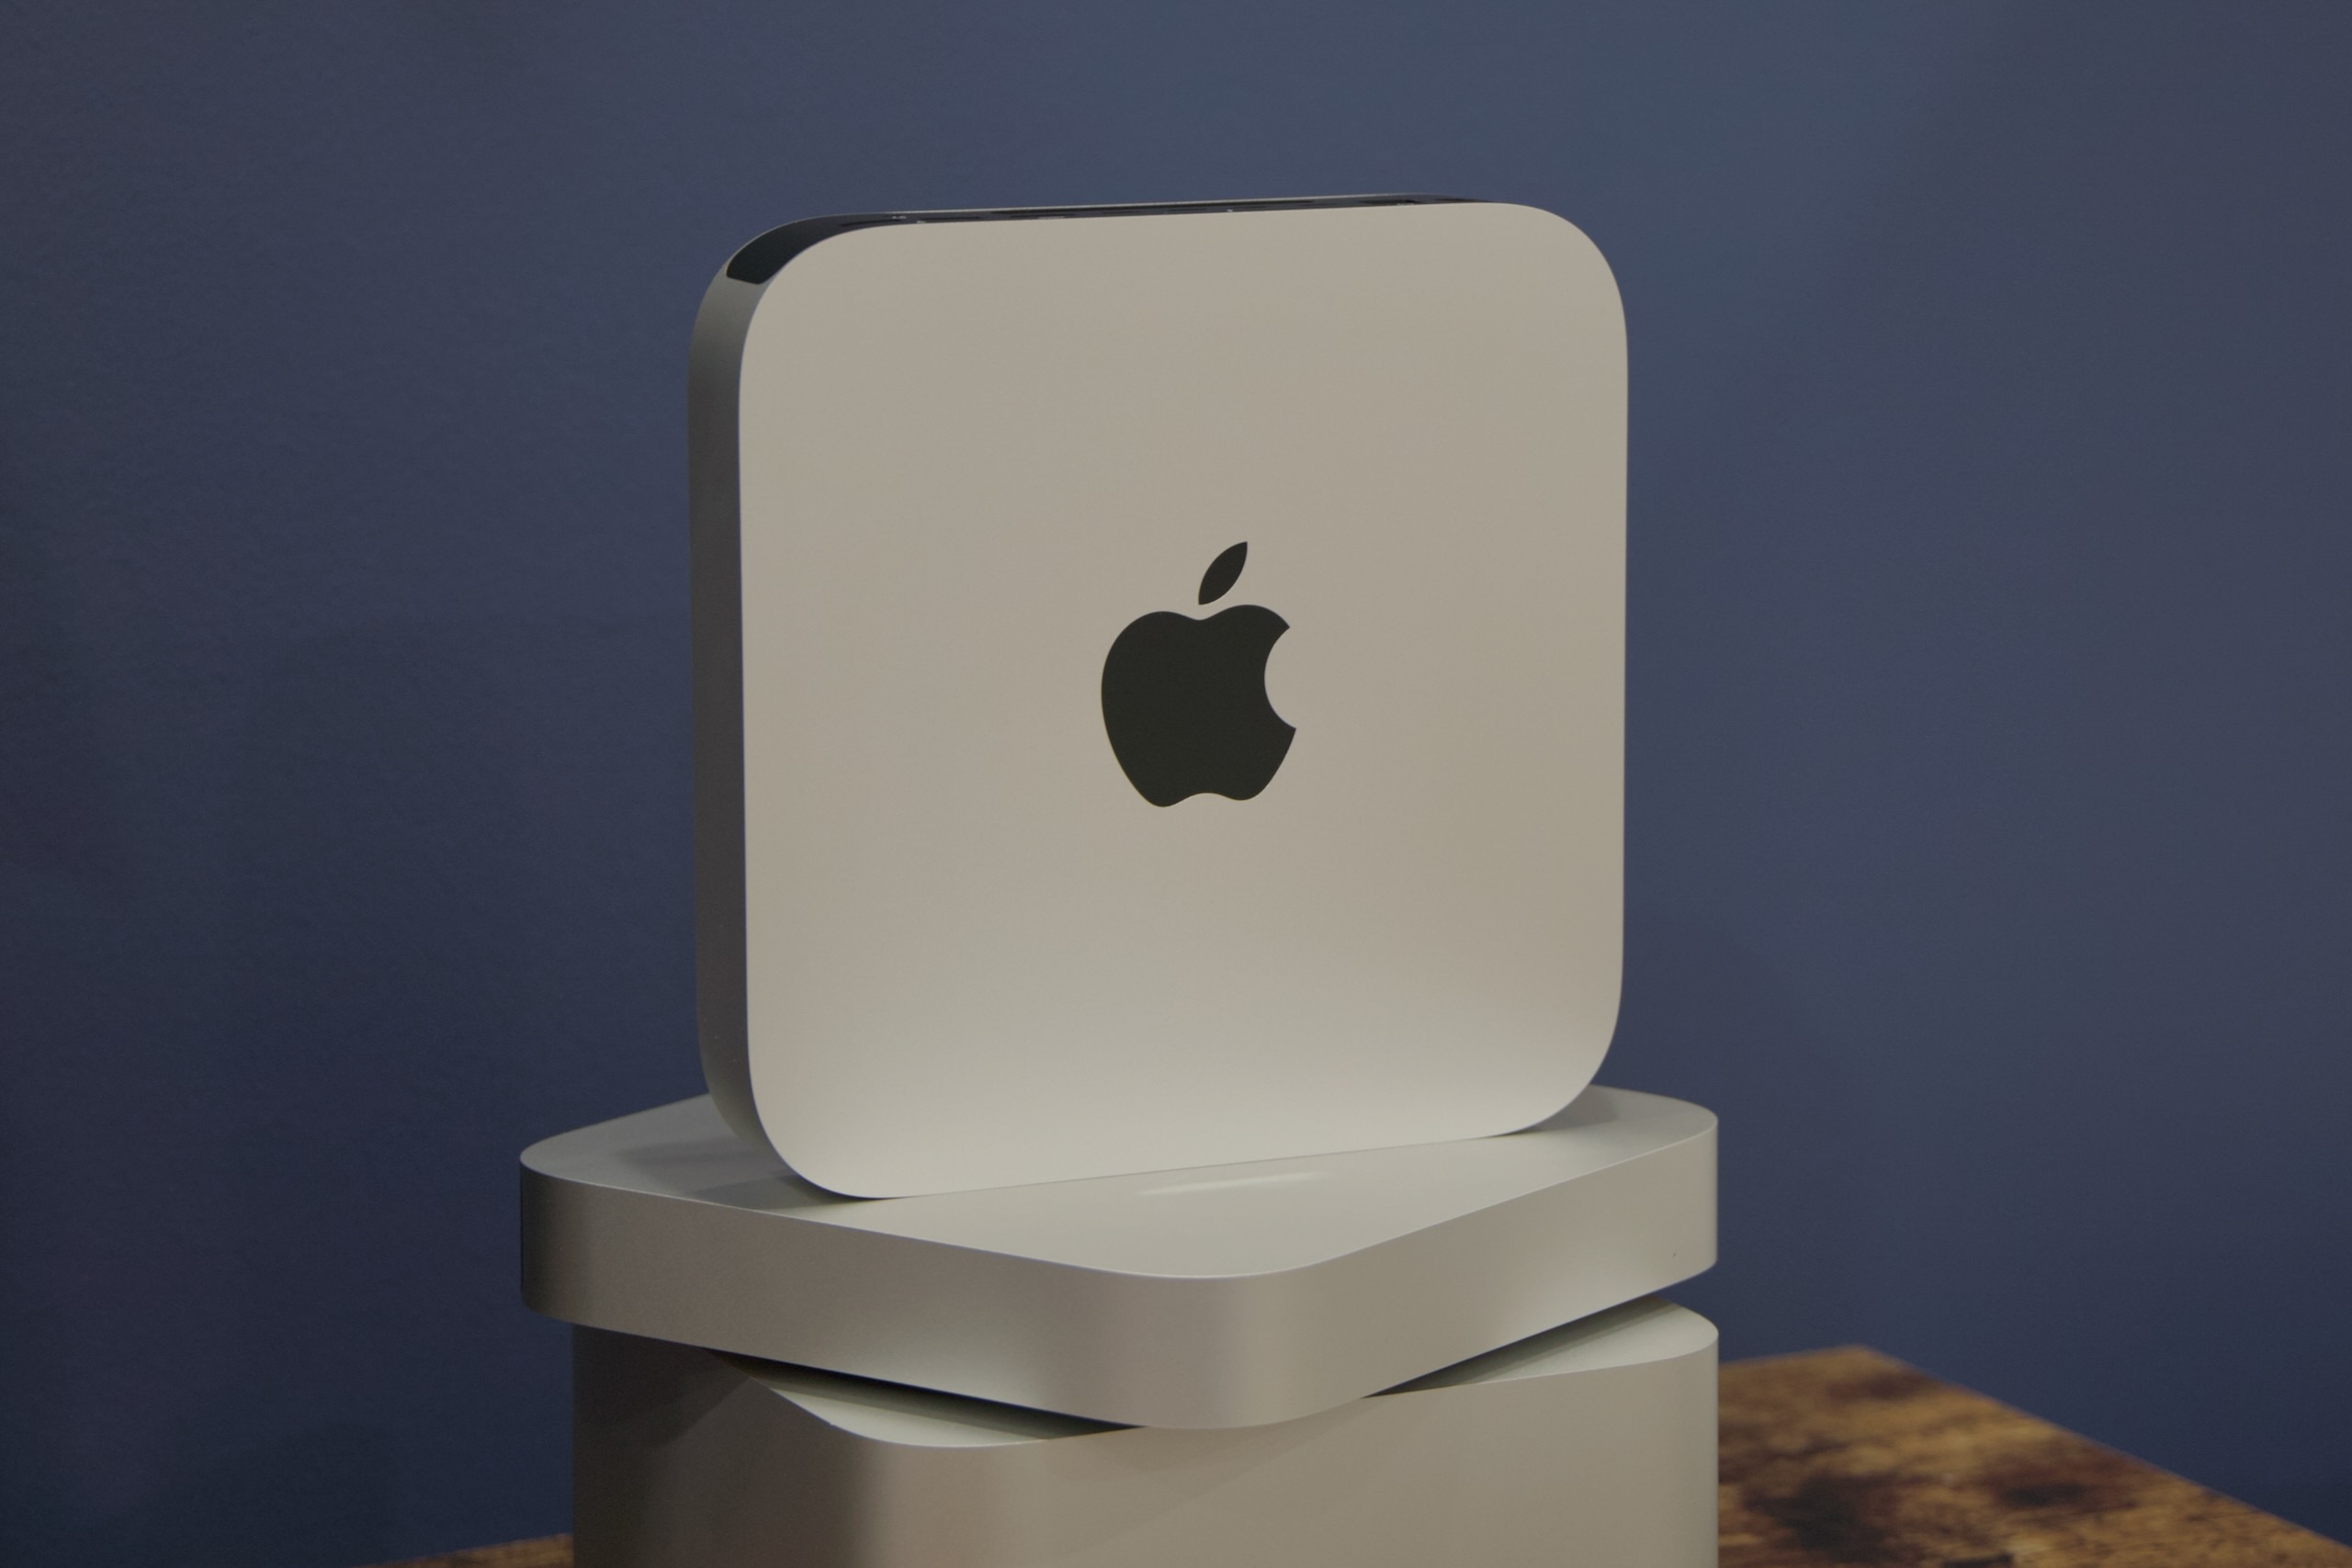 M2 Pro Mac mini review: Apple's Goldilocks desktop for semi-professionals